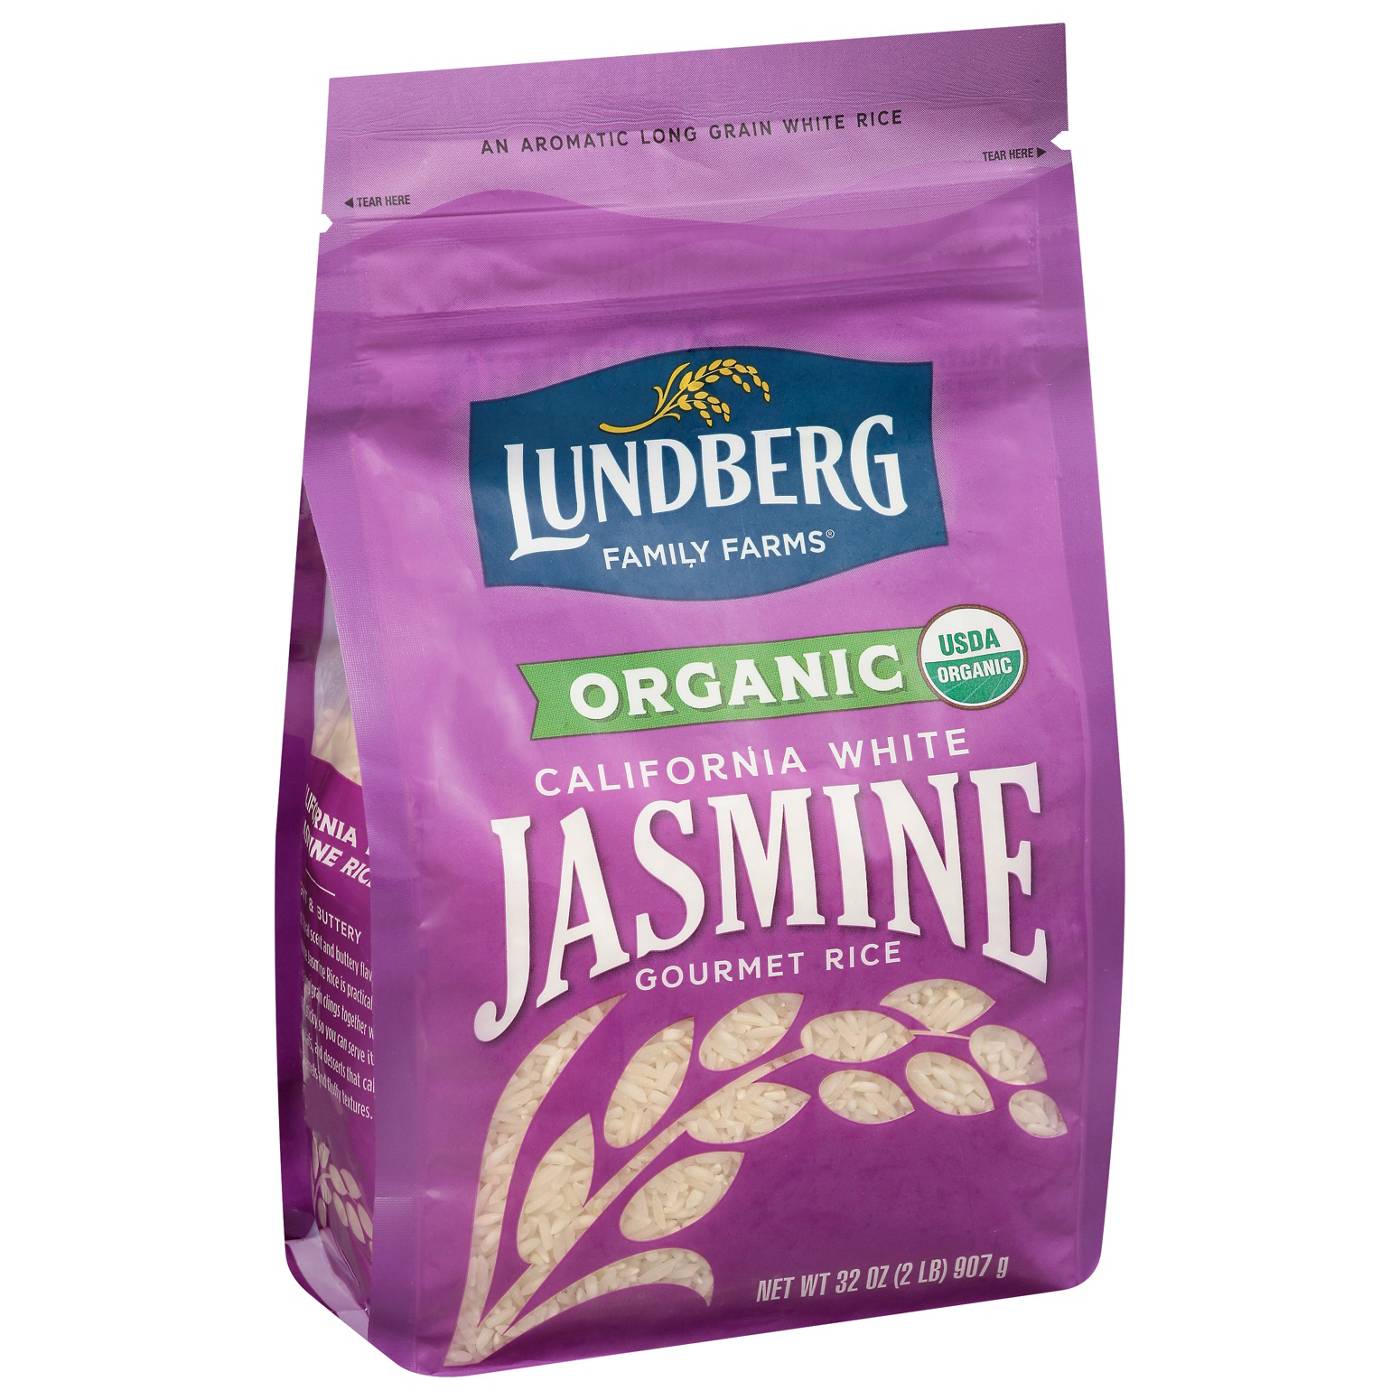 Lundberg Organic California White Jasmine Rice; image 2 of 2